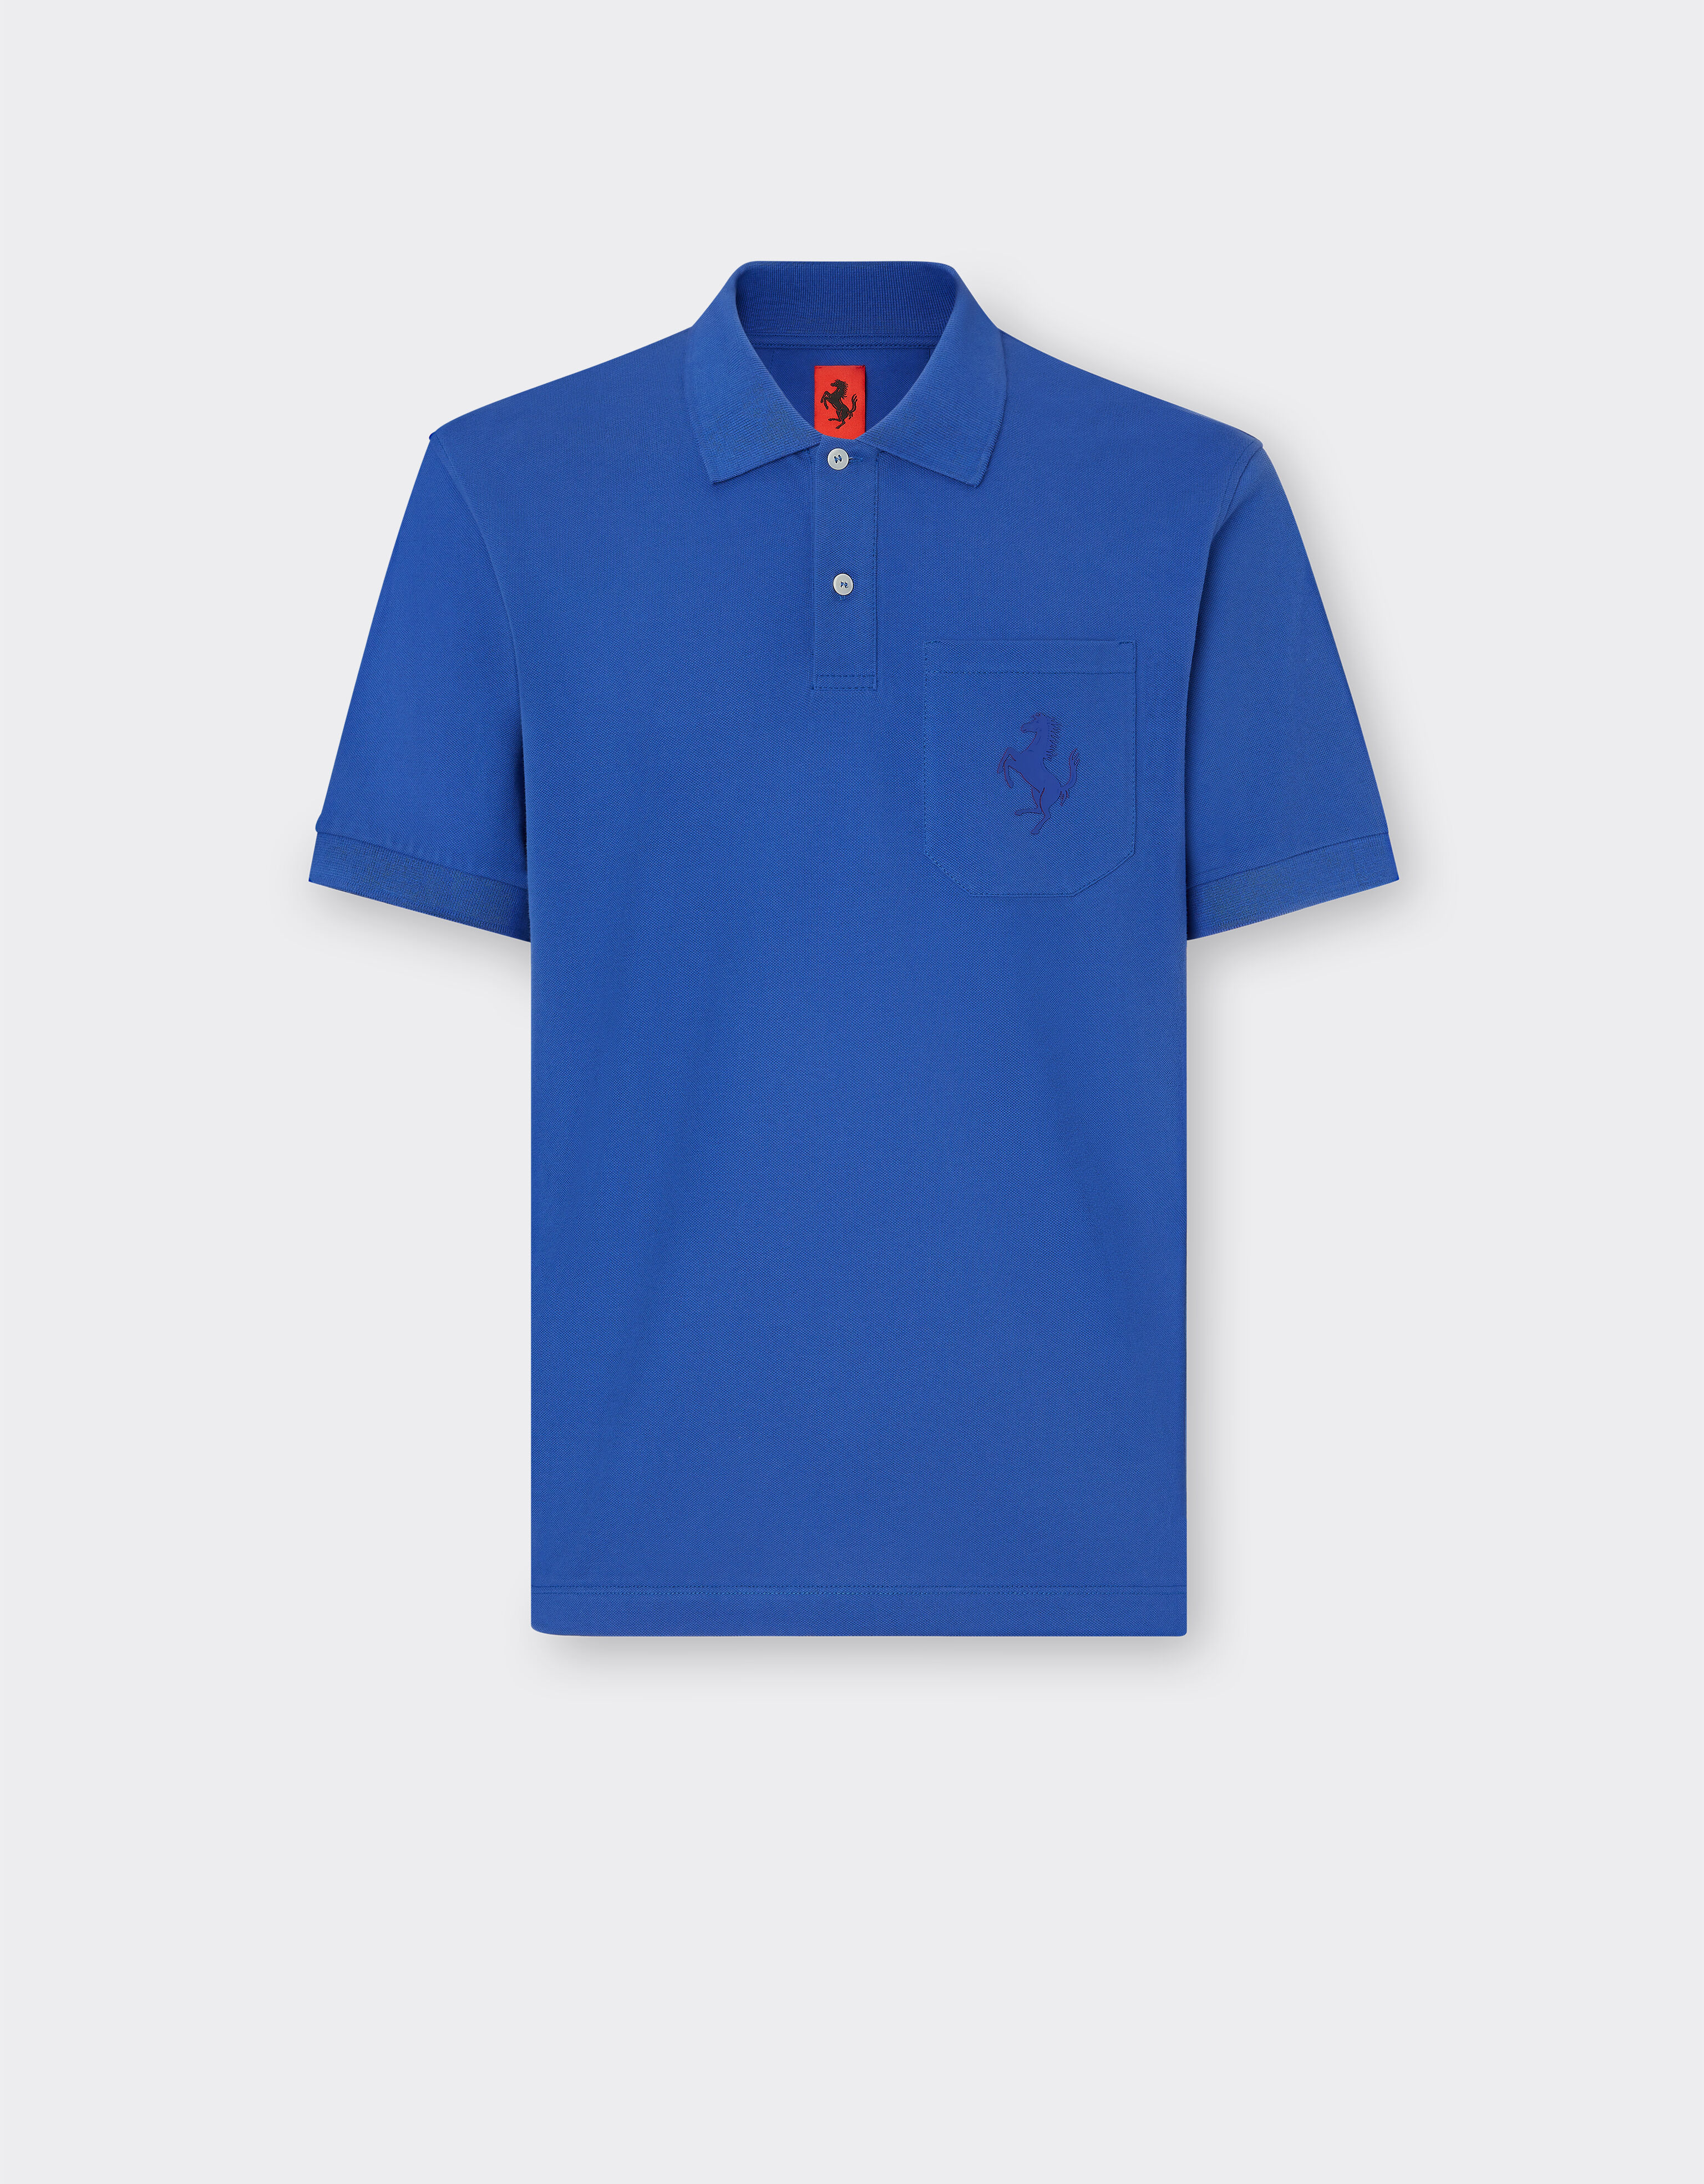 Ferrari Piqué cotton polo shirt with Prancing Horse detail Antique Blue 48300f